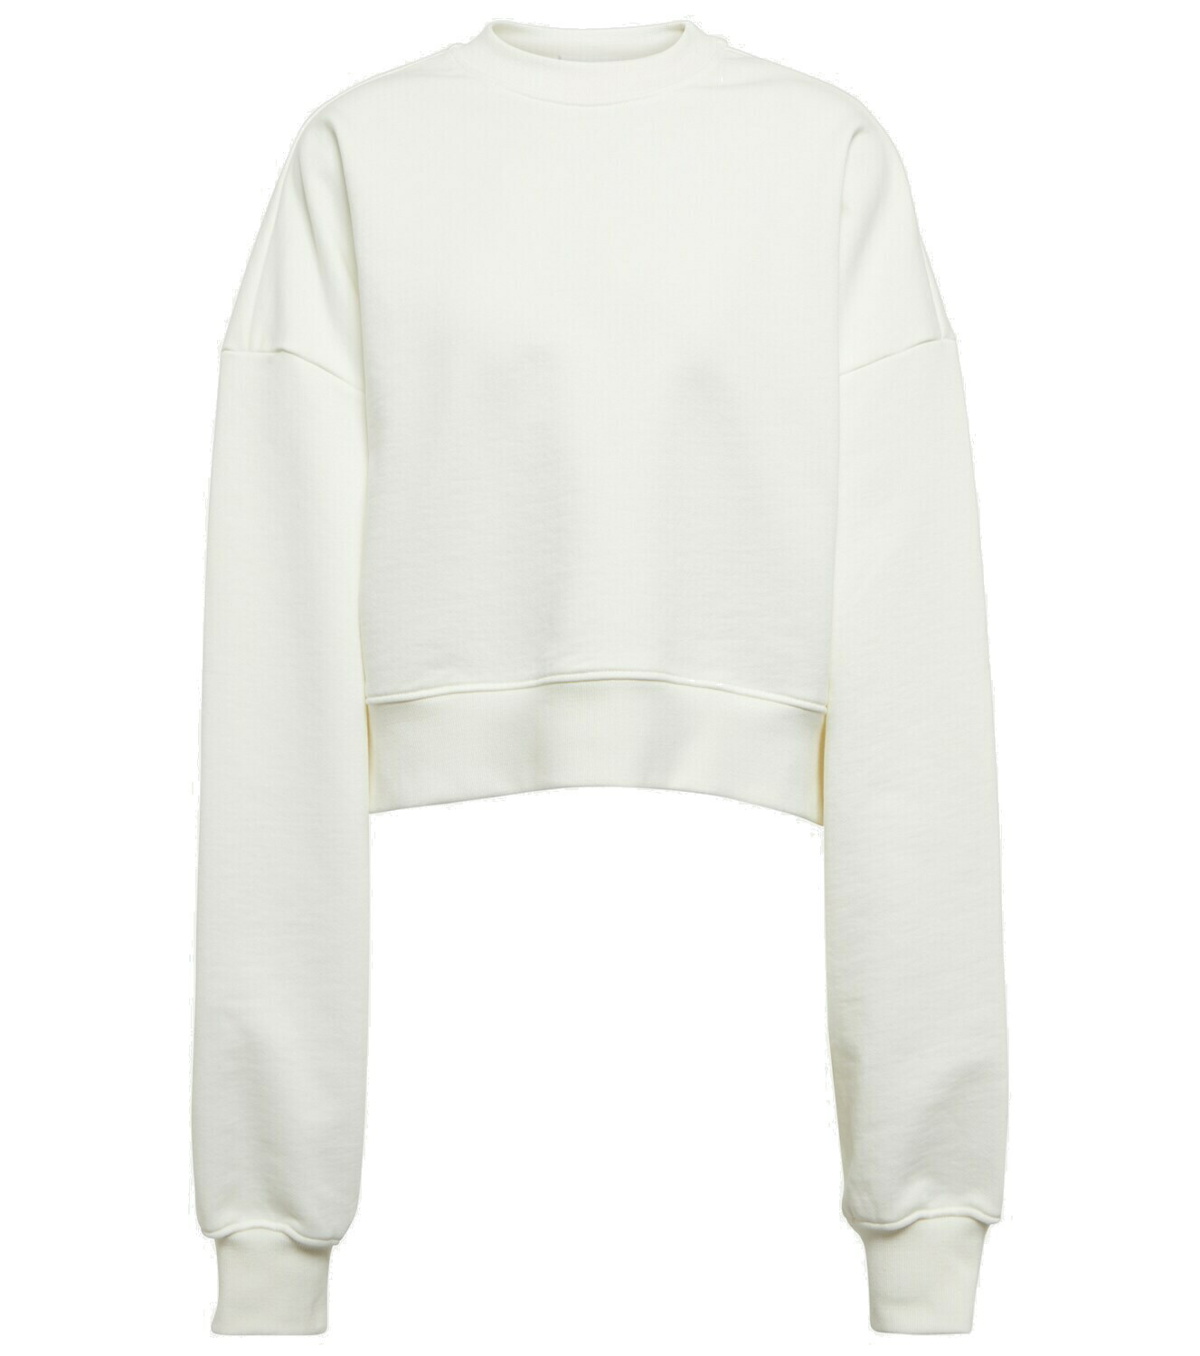 x Hailey Bieber HB cotton fleece sweatpants in white - Wardrobe